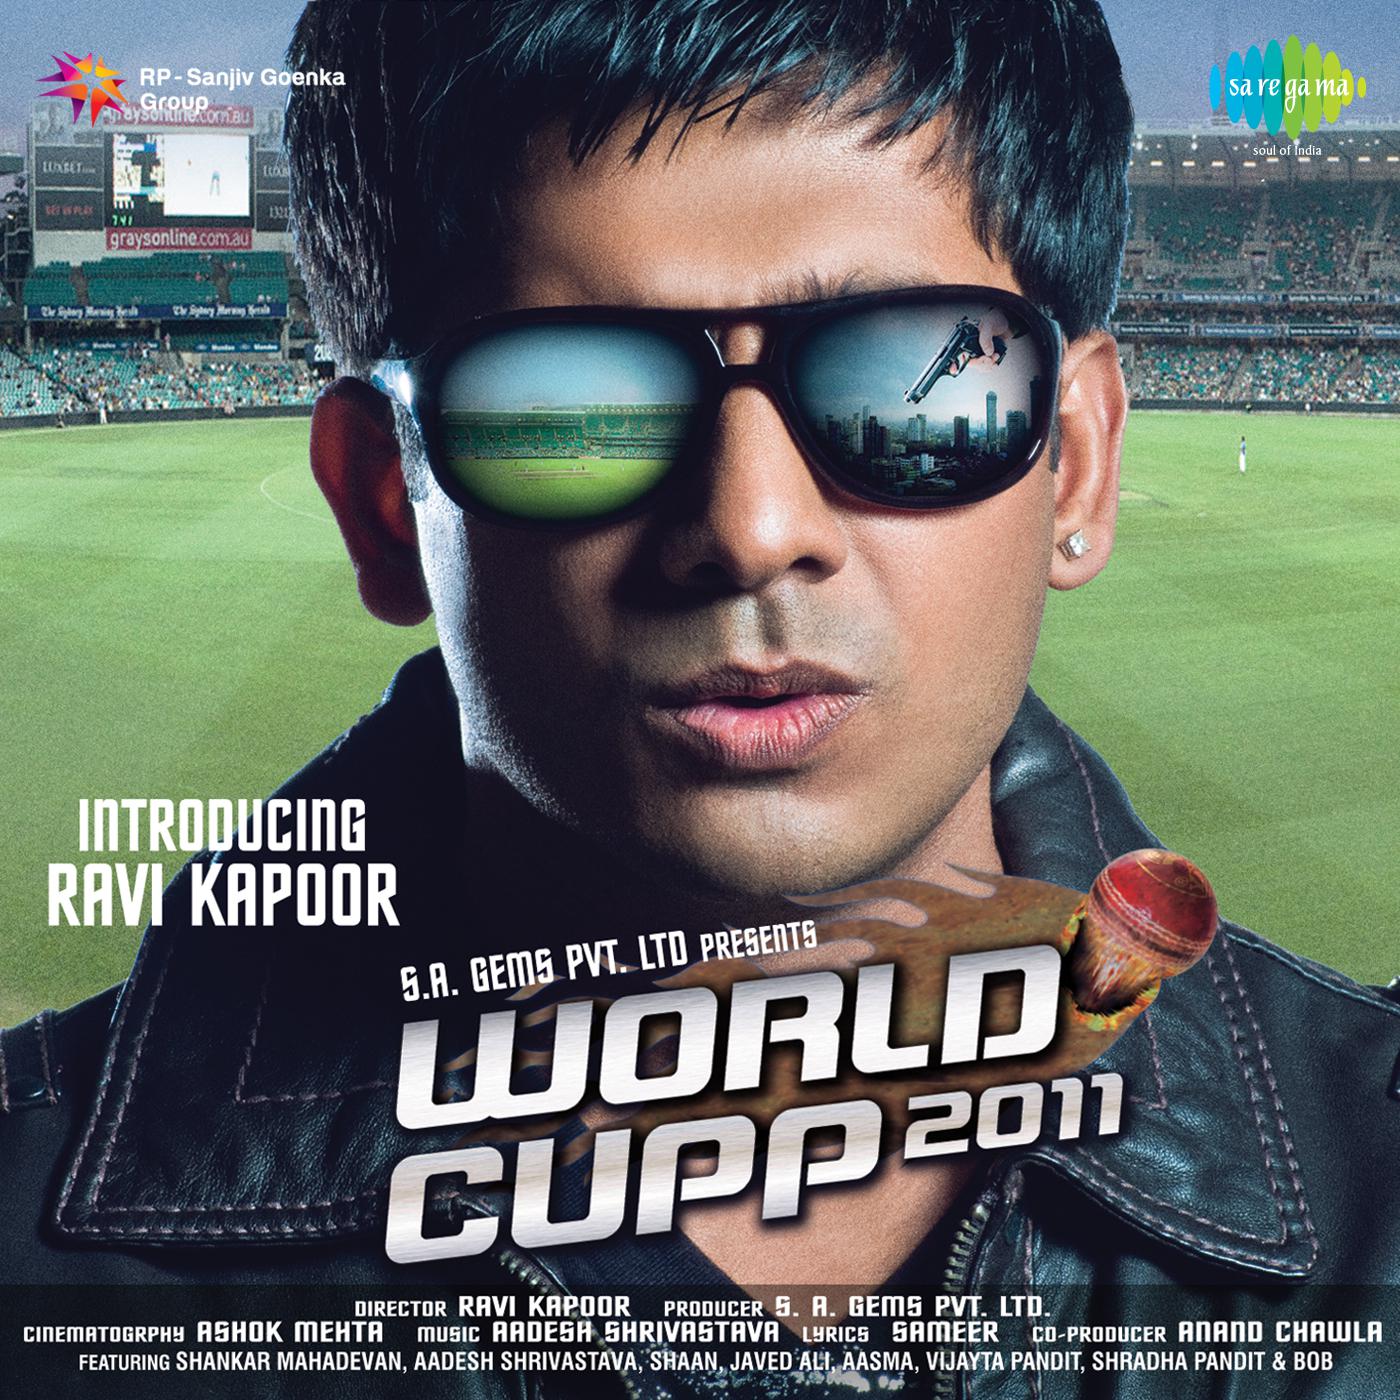 World Cupp 2011专辑